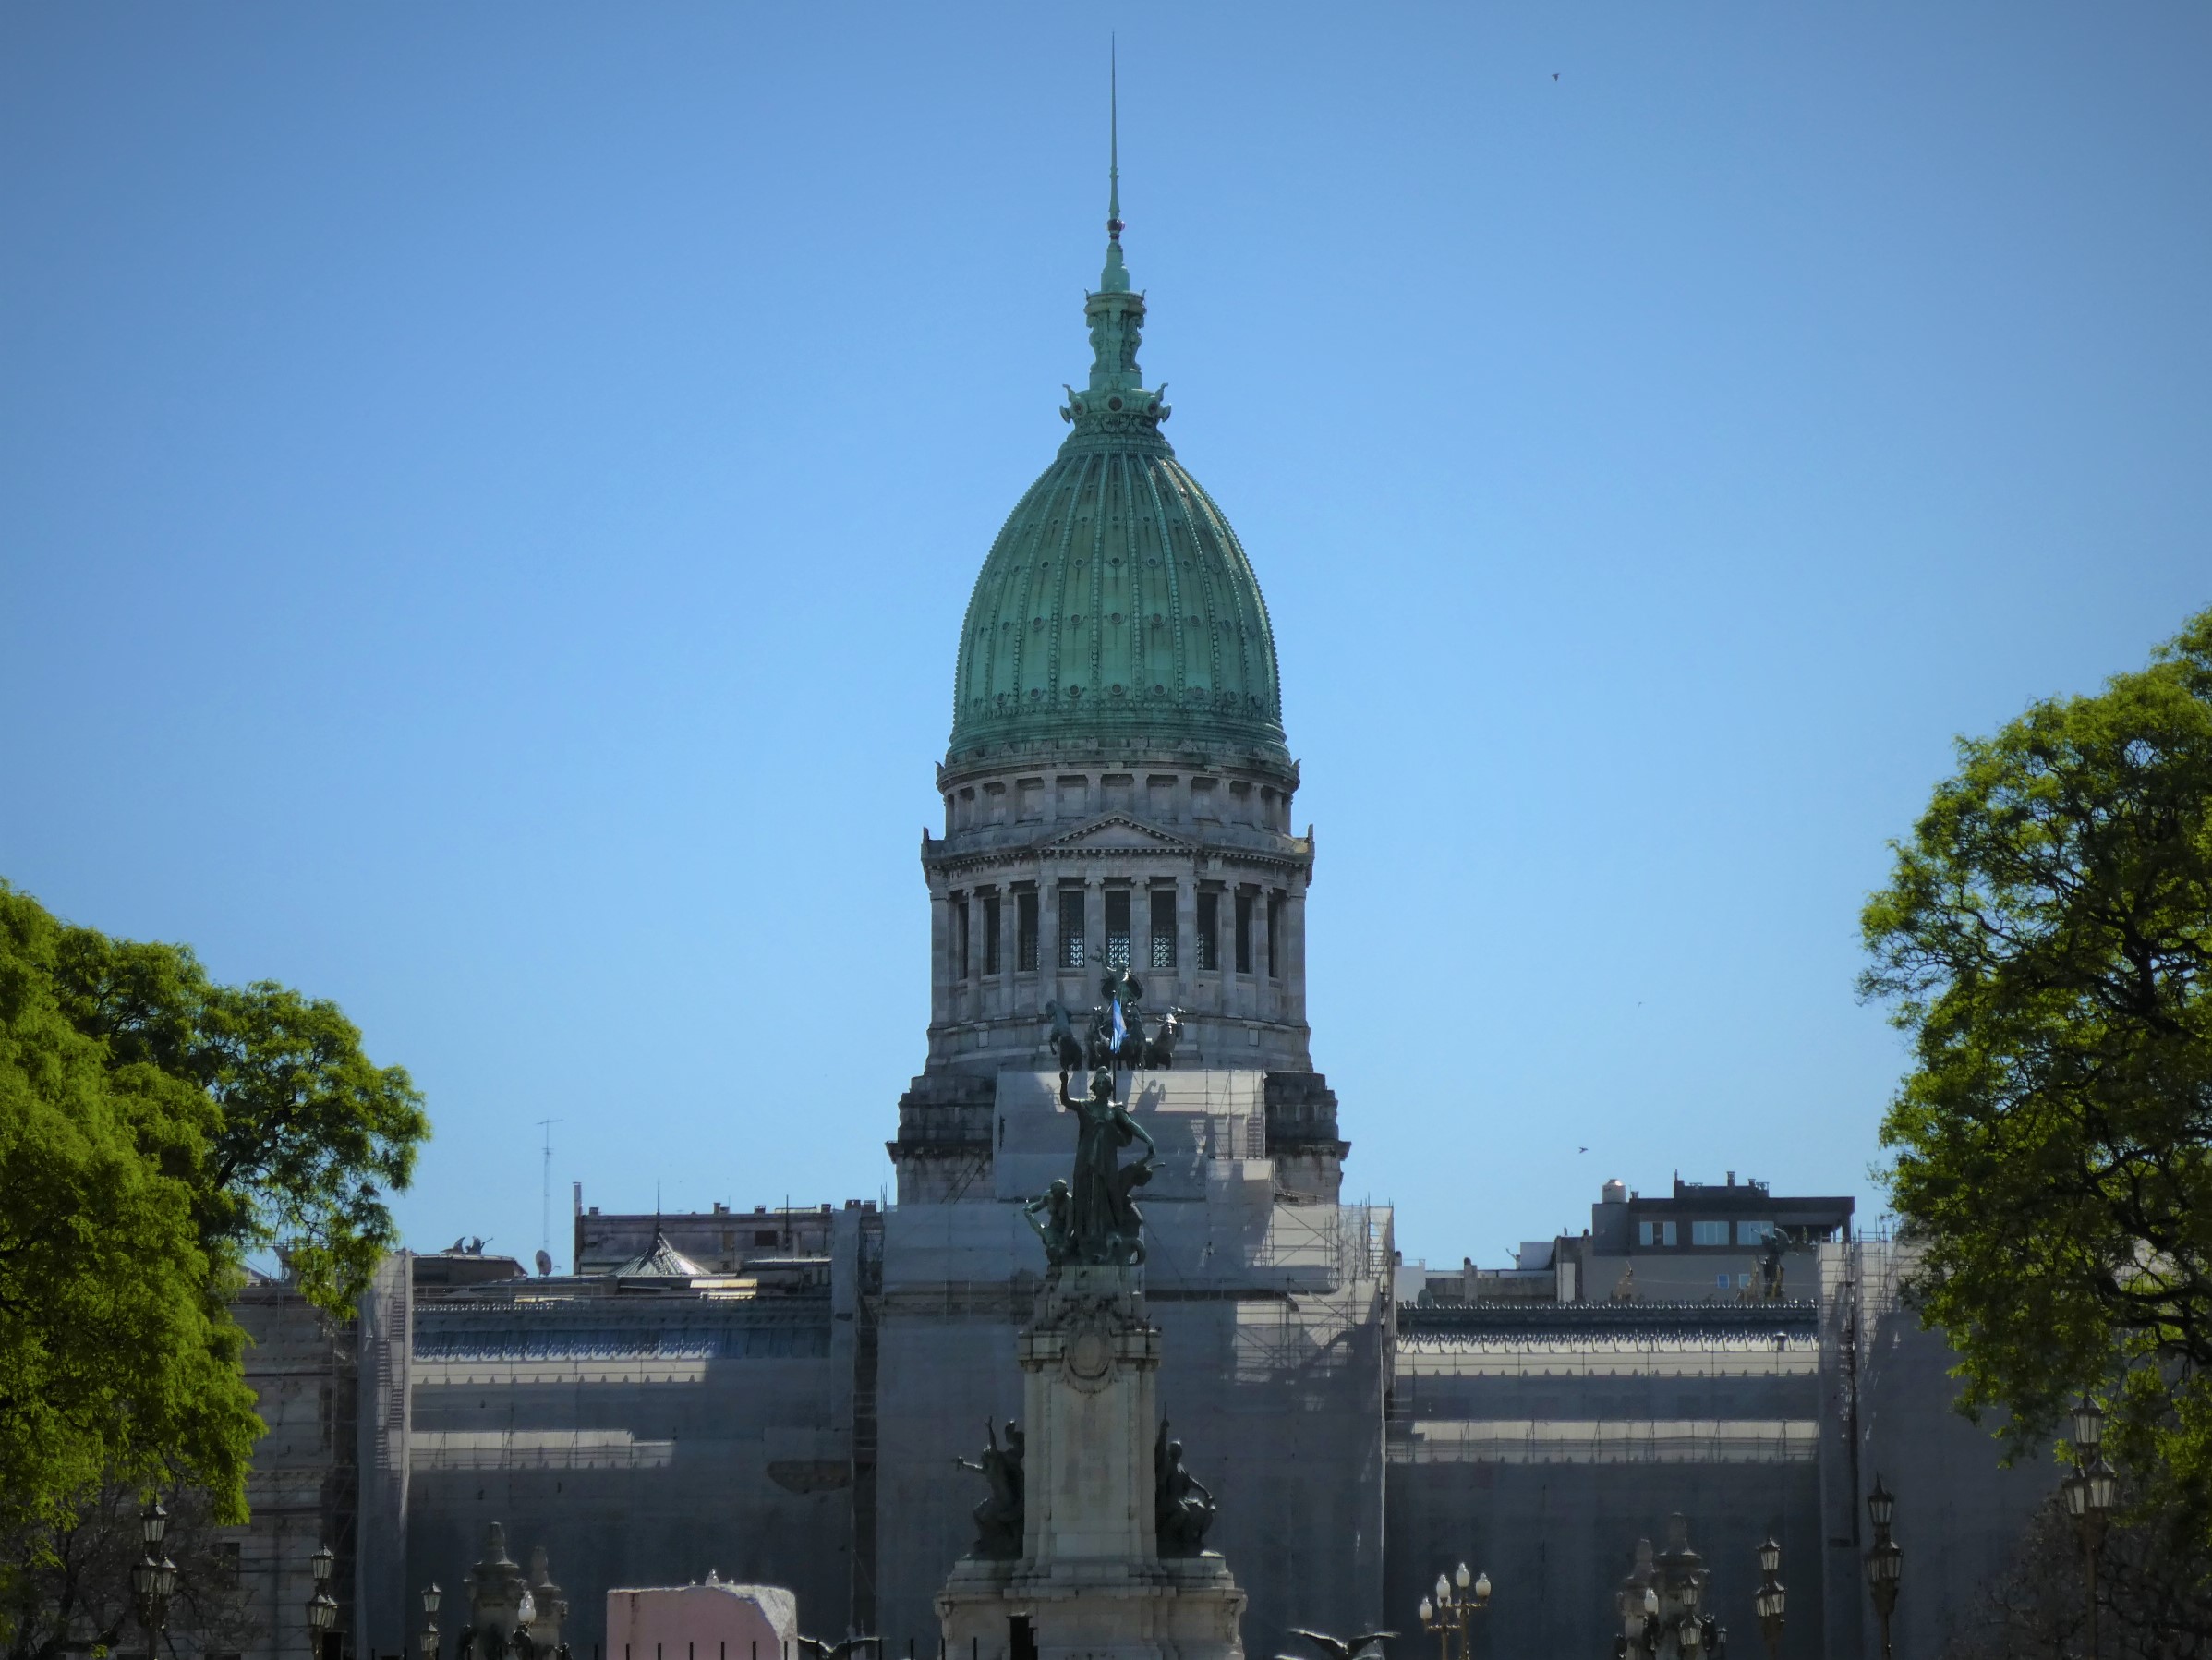 Buenos Aires Plaza de Congreso by hesaidorshesaid